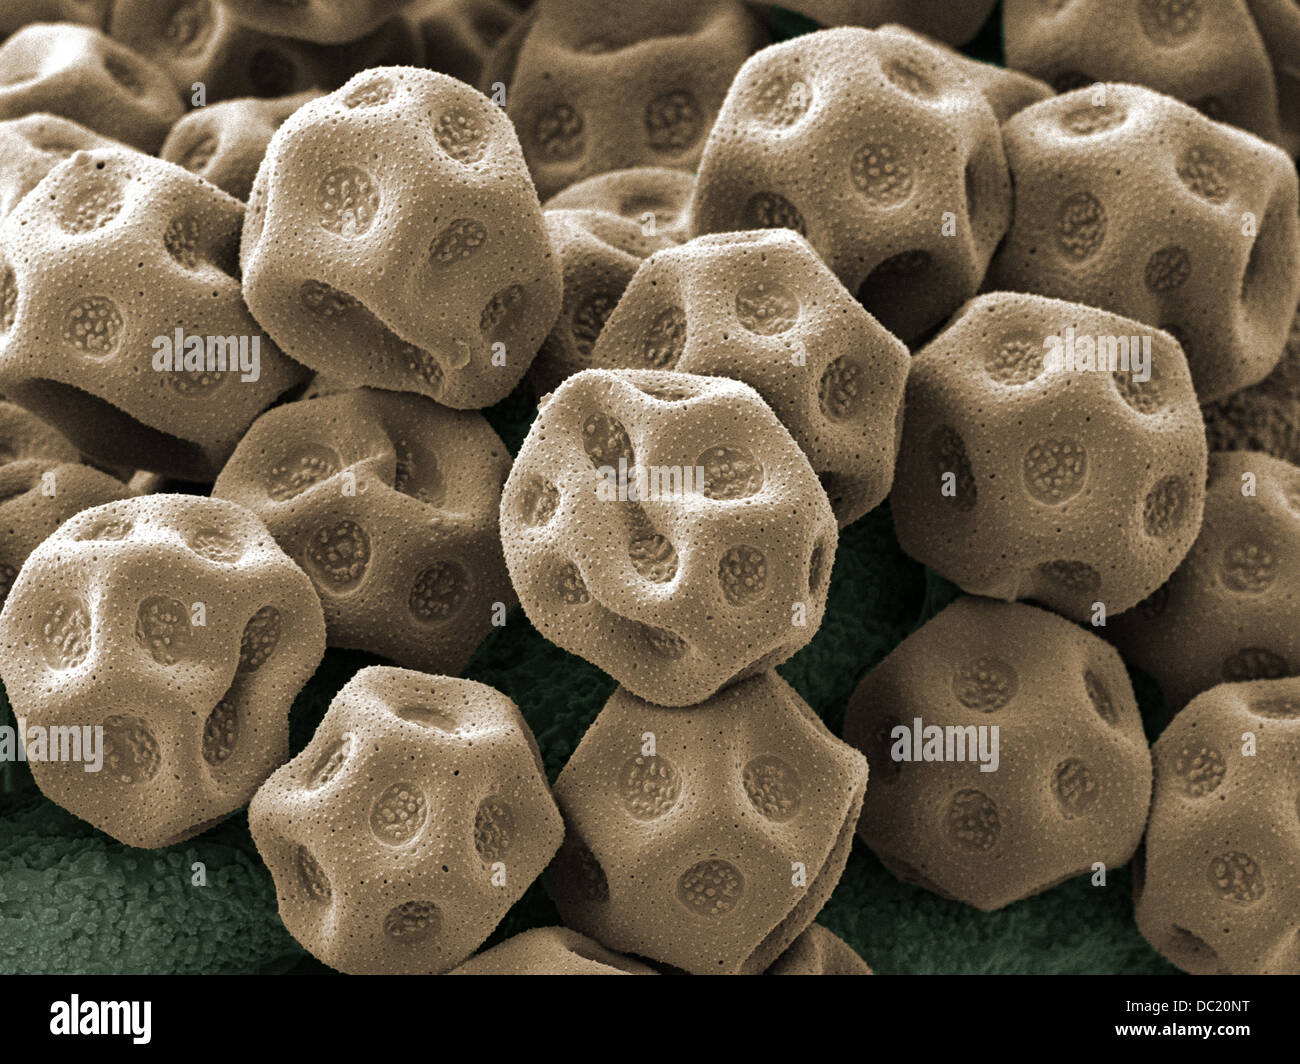 White flower pollen x1000 magnification Stock Photo